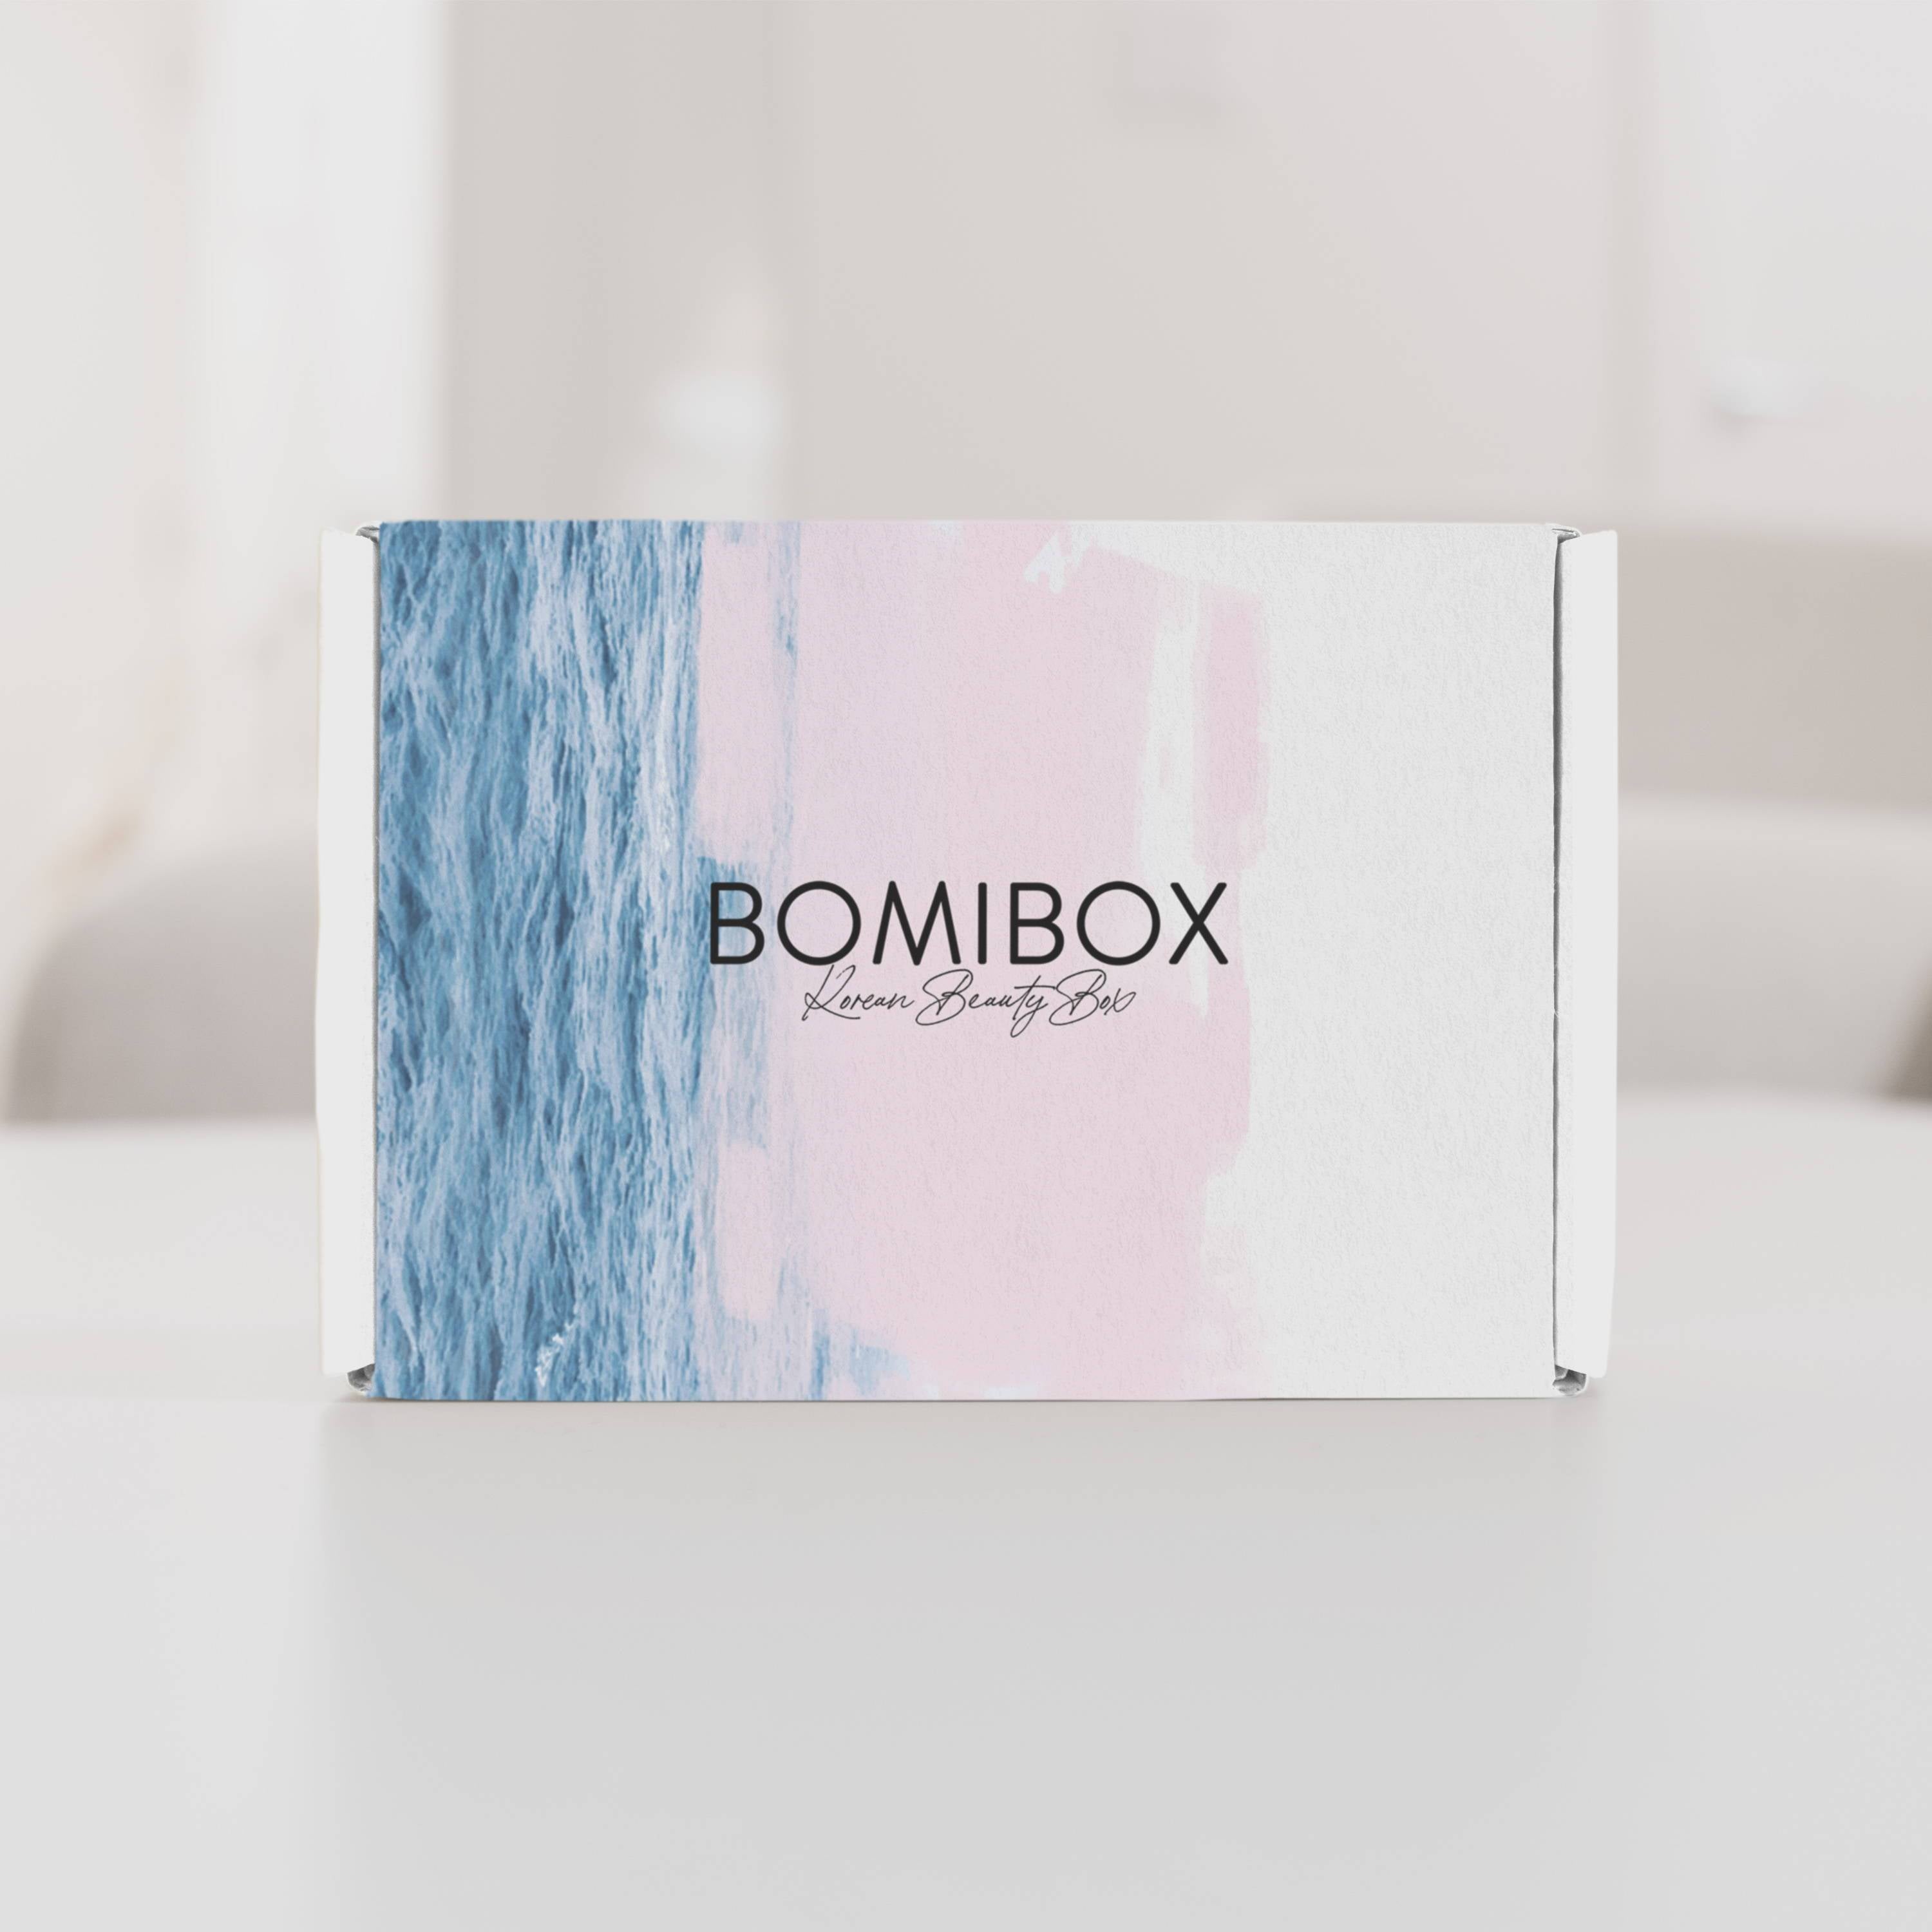 Past Boxes-Bomibox July 2020 - Korean Beauty Box Monthly Korean Skincare Subscription